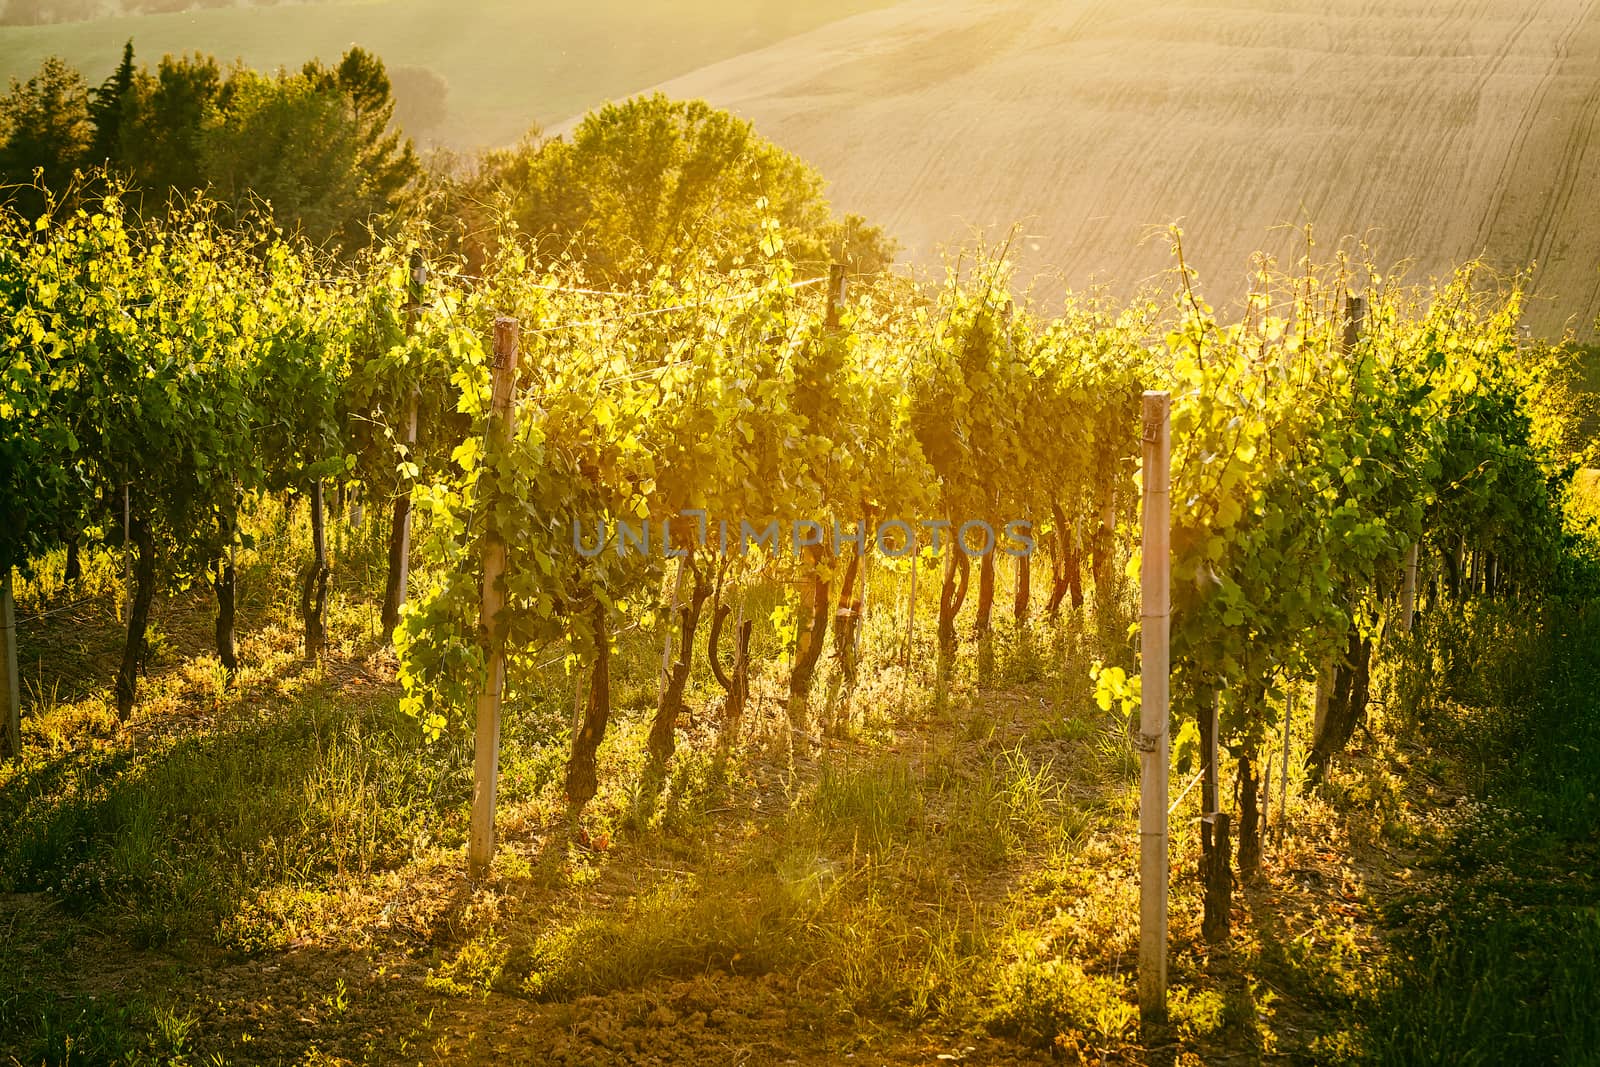 Vineyard rows at sunset